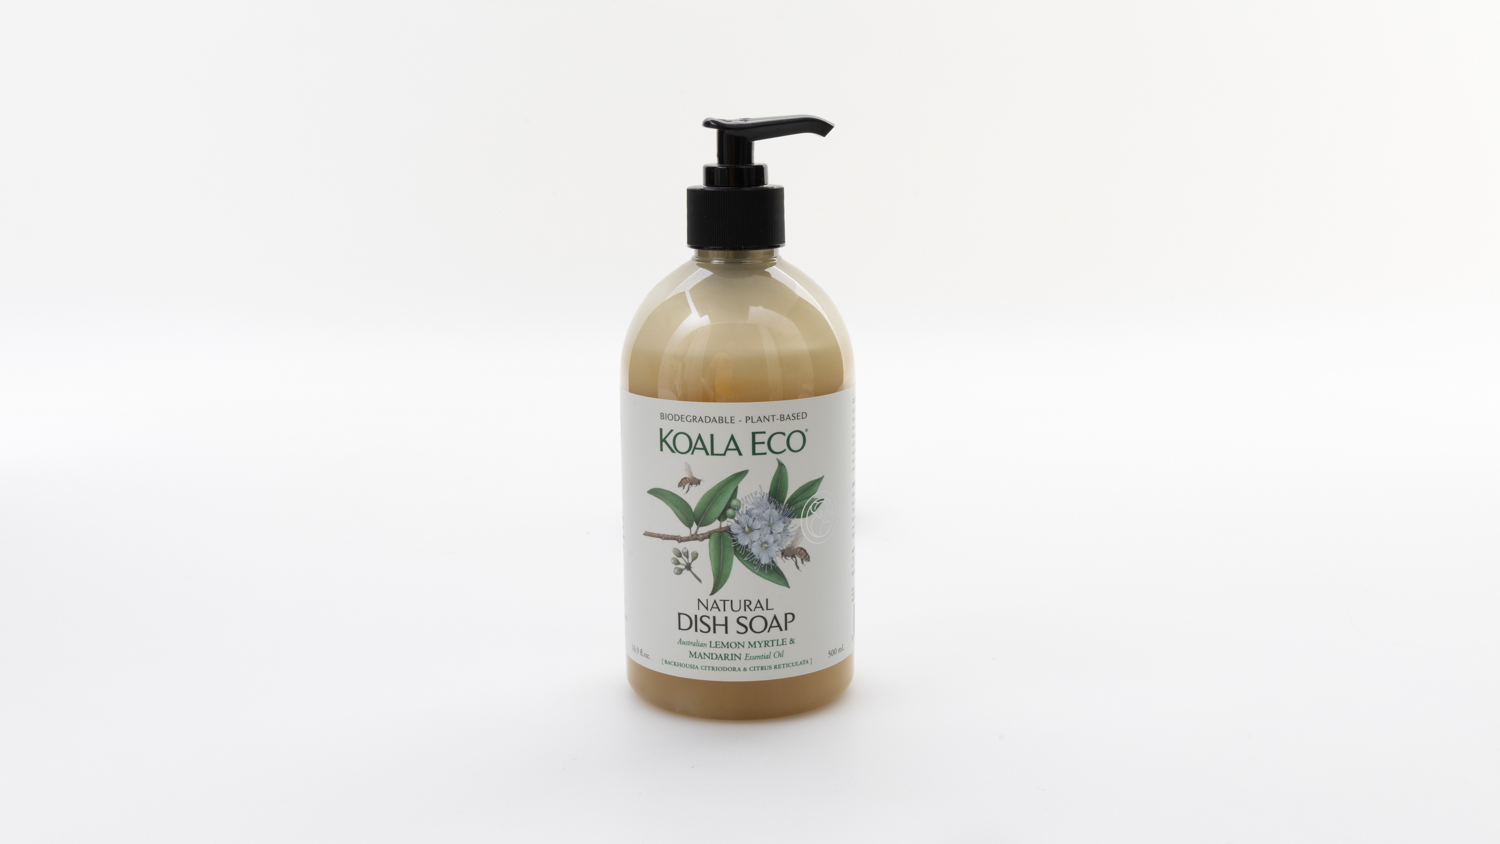 Koala Eco Natural Dish Soap Australian Lemon Myrtle and Mandarin Essential Oil carousel image